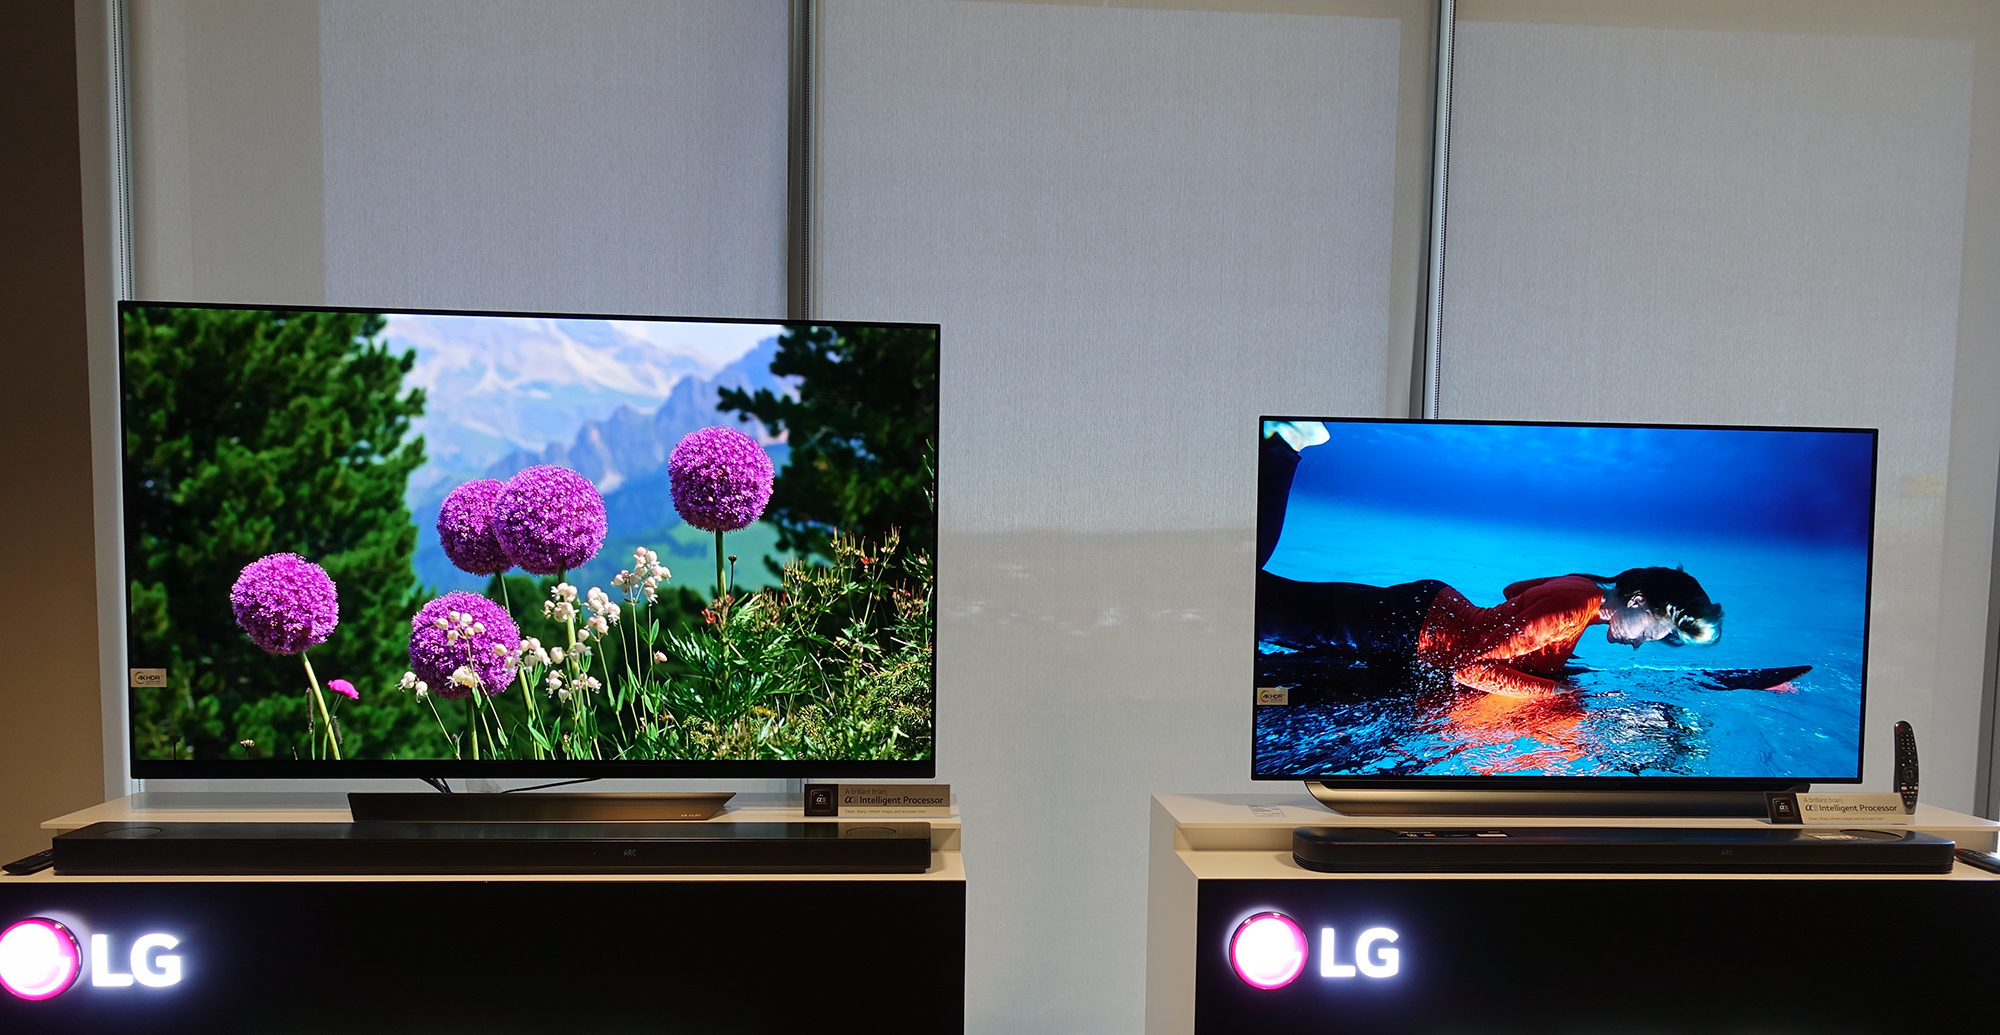 Samsung TV vs LG TV price difference comparison